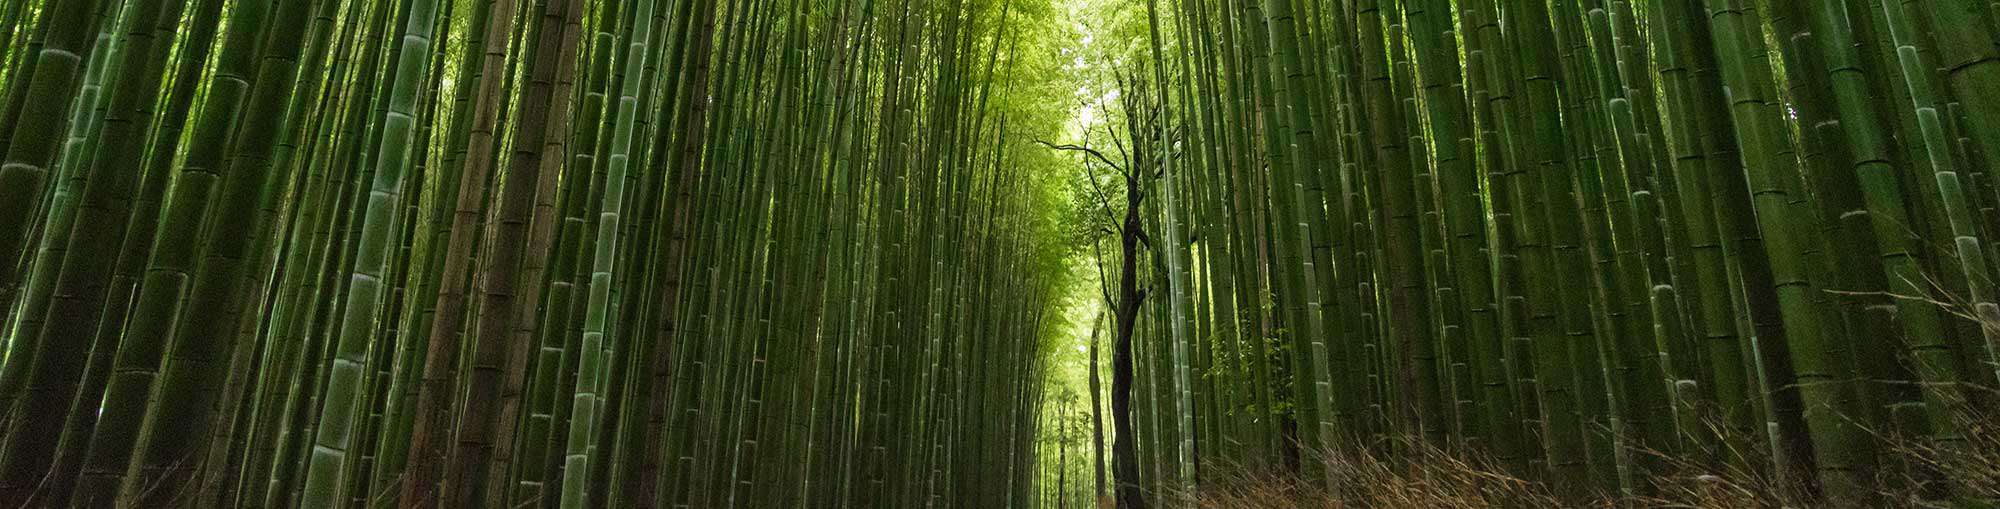 bamboo forest - chiropractor san rafael